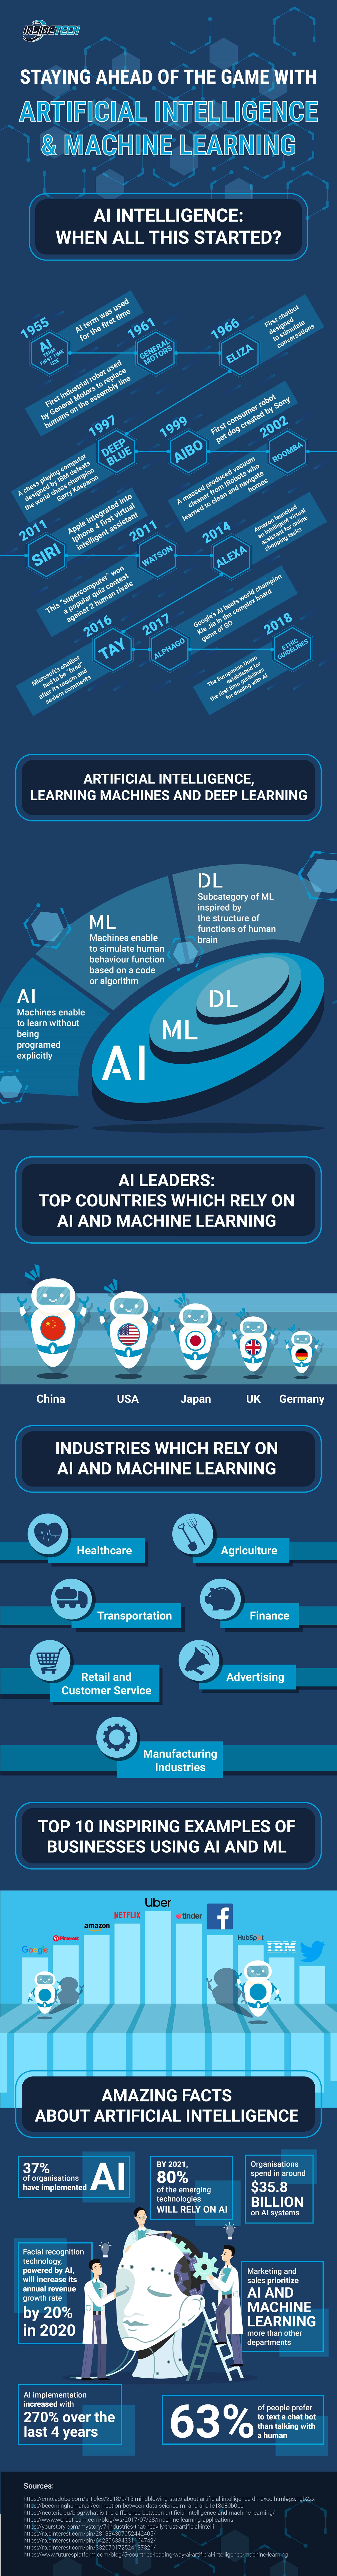 AI industry leaders